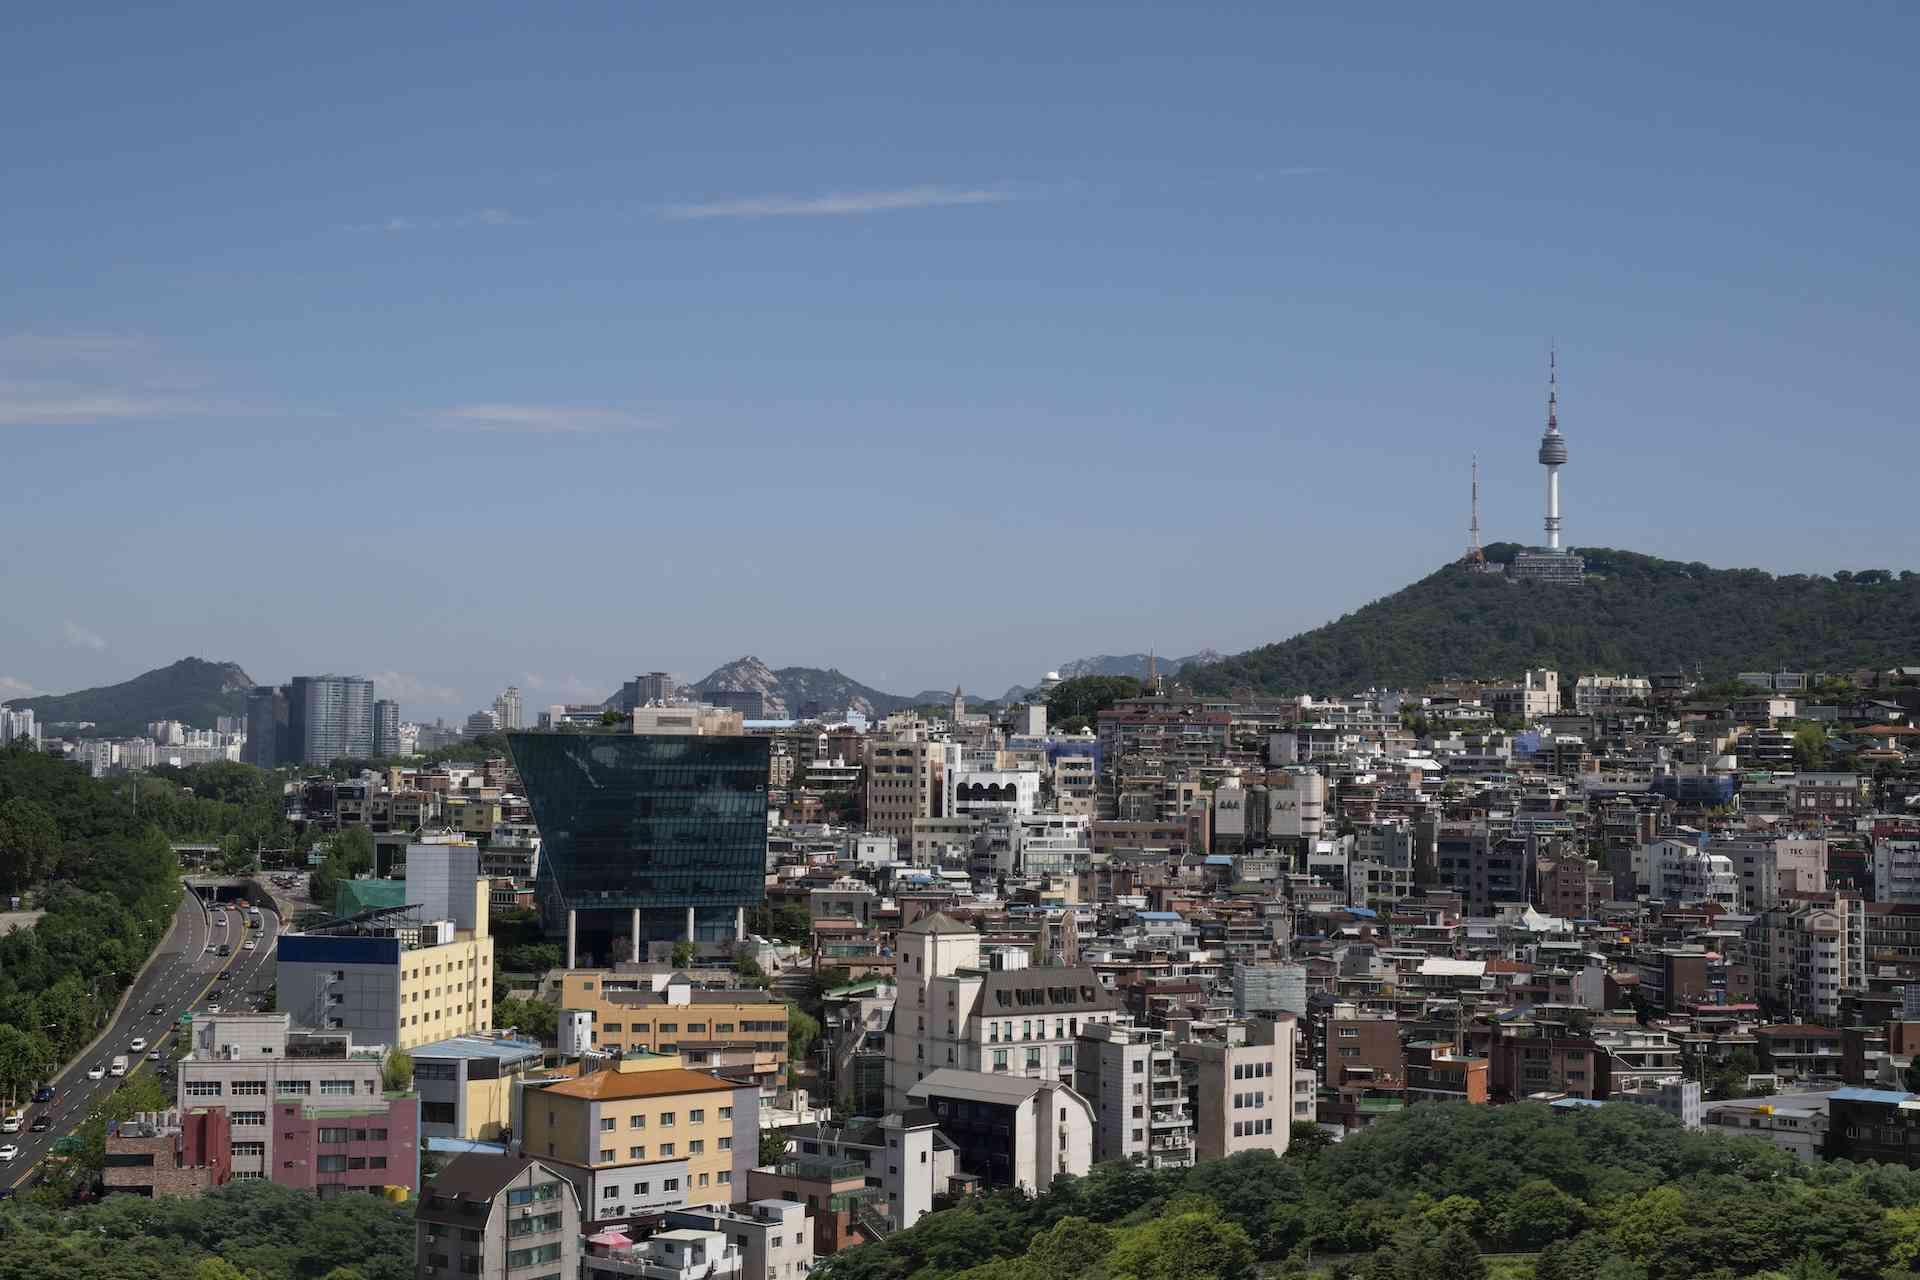 External View of Seoul